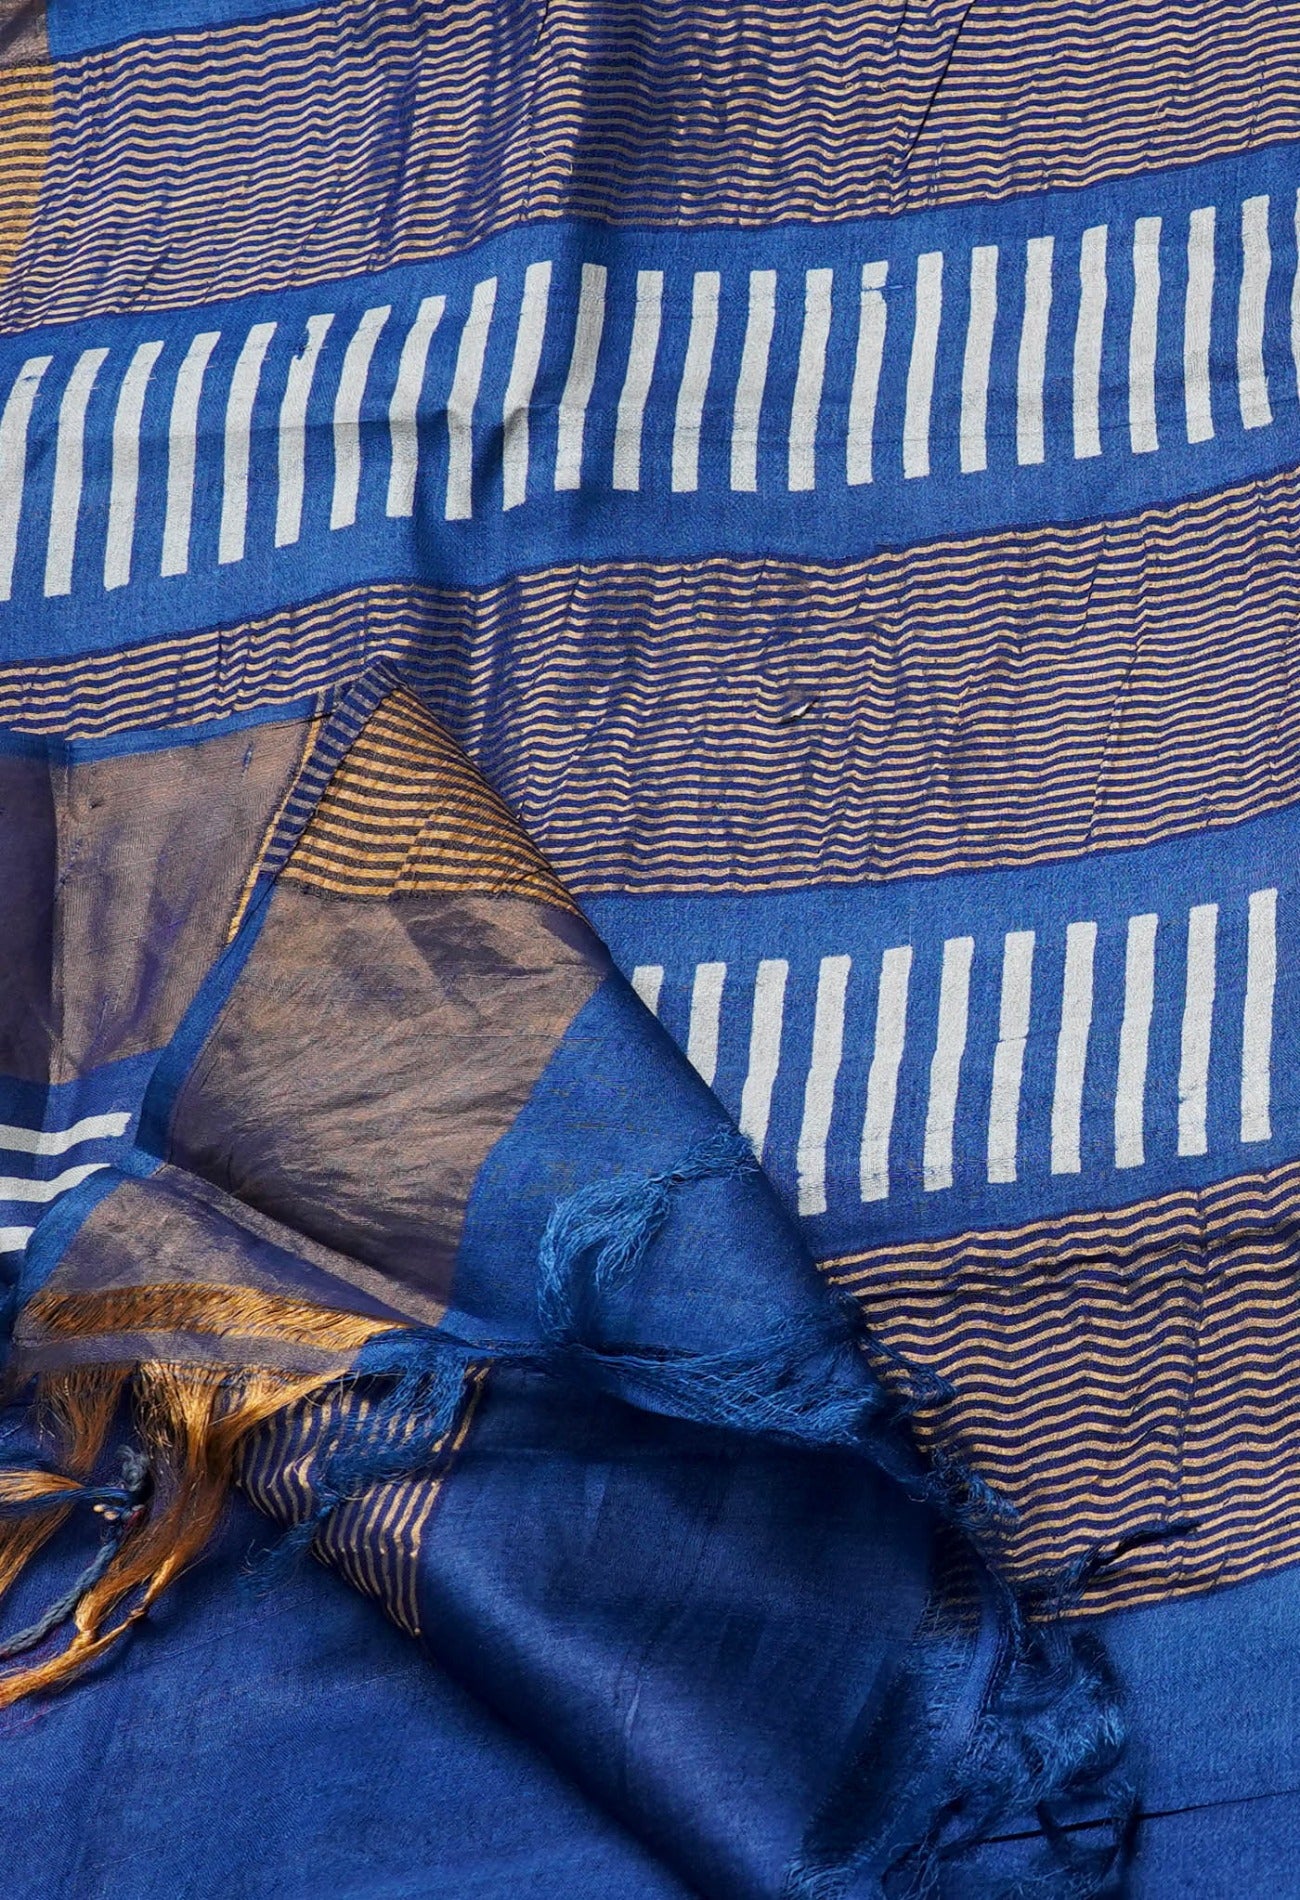 Navy Blue Pure Handloom Bengal Tussar Silk Saree